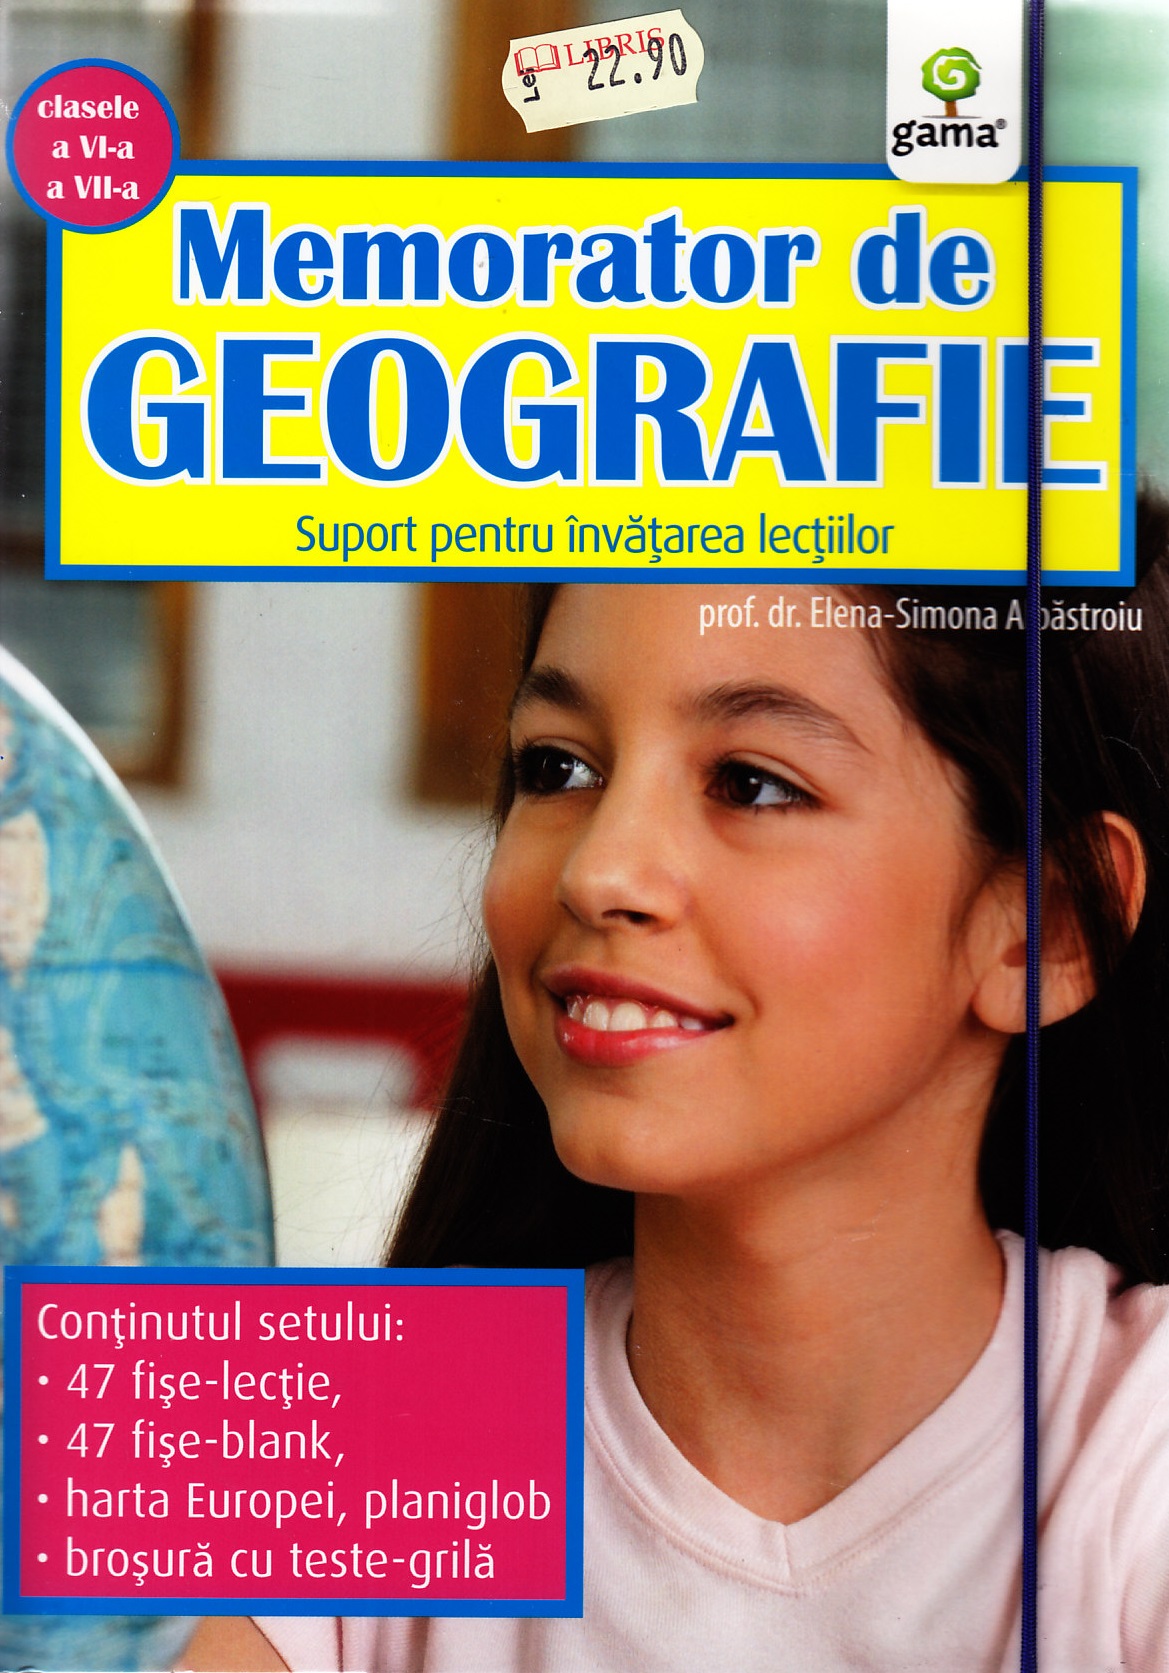 Memorator de geografie clasa 6 si 7 - Elena-Simona Albastroiu